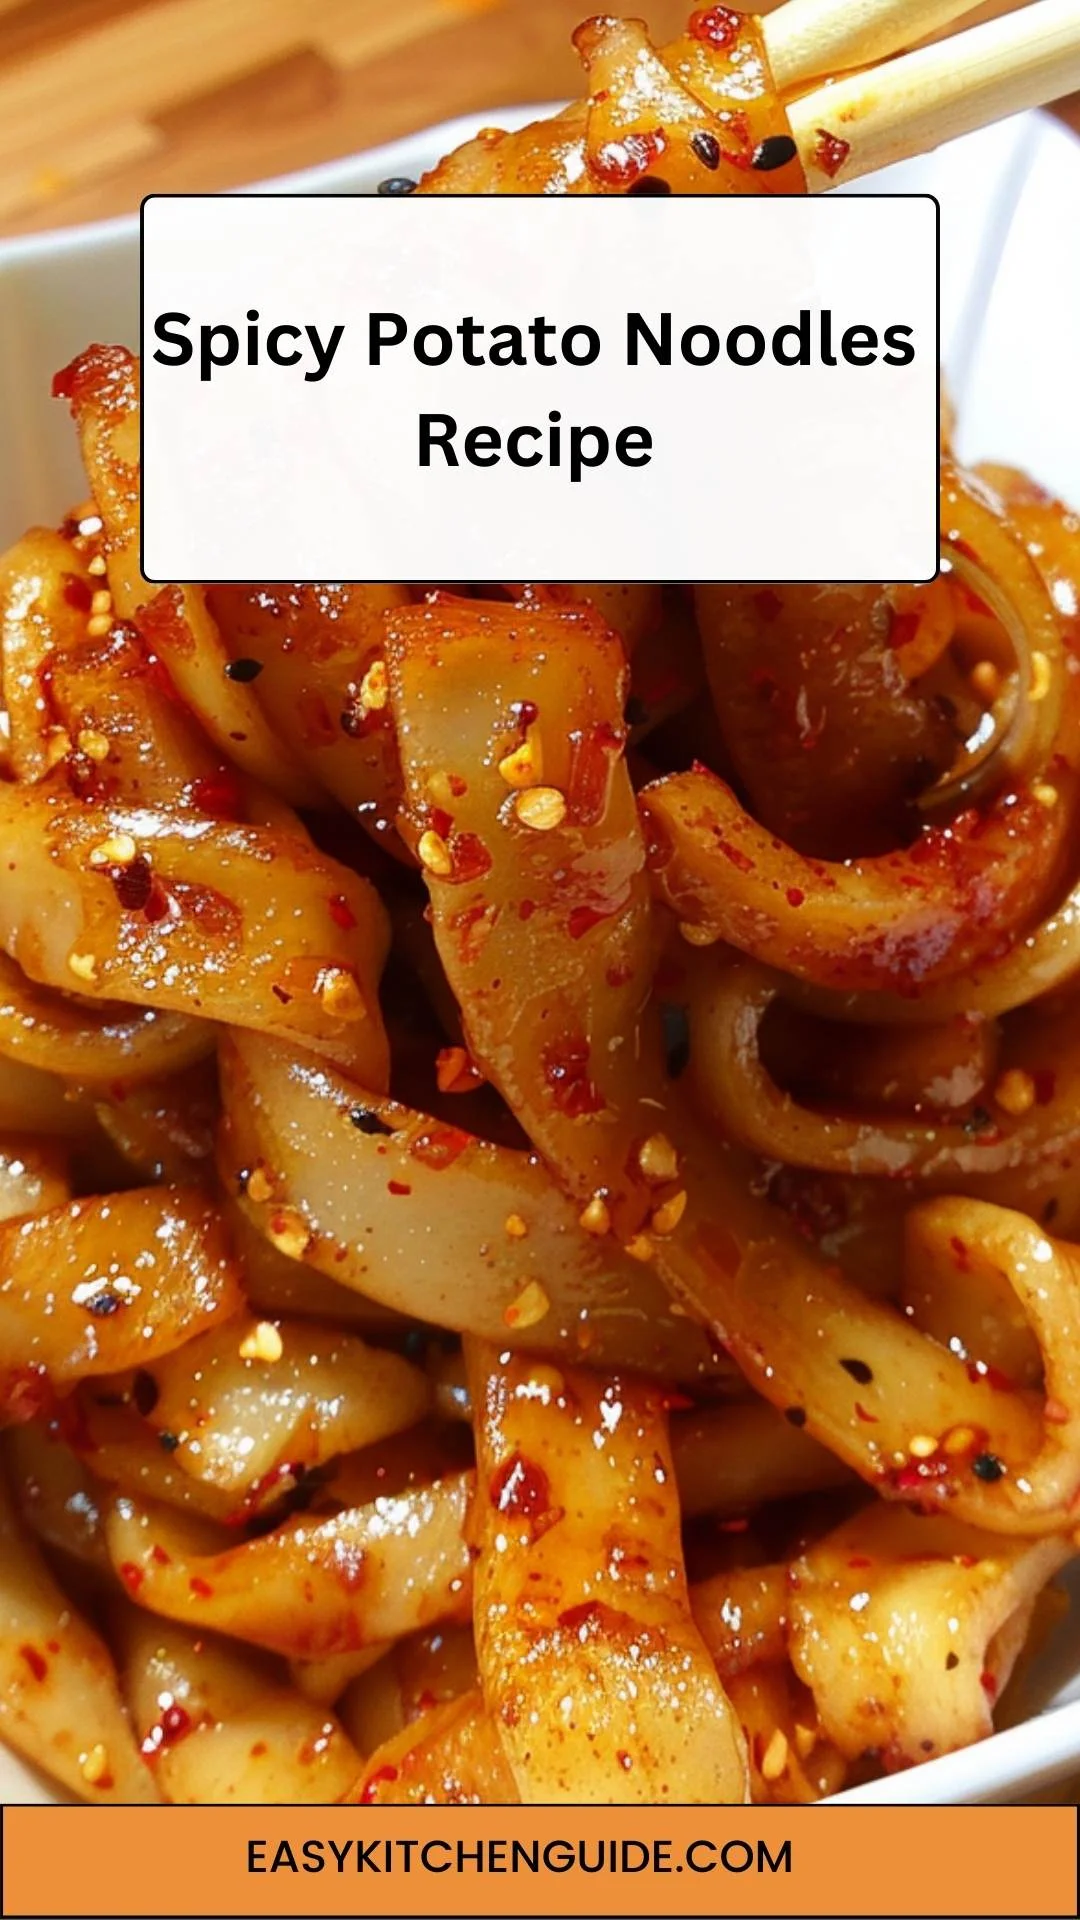 Spicy Potato Noodles Recipe